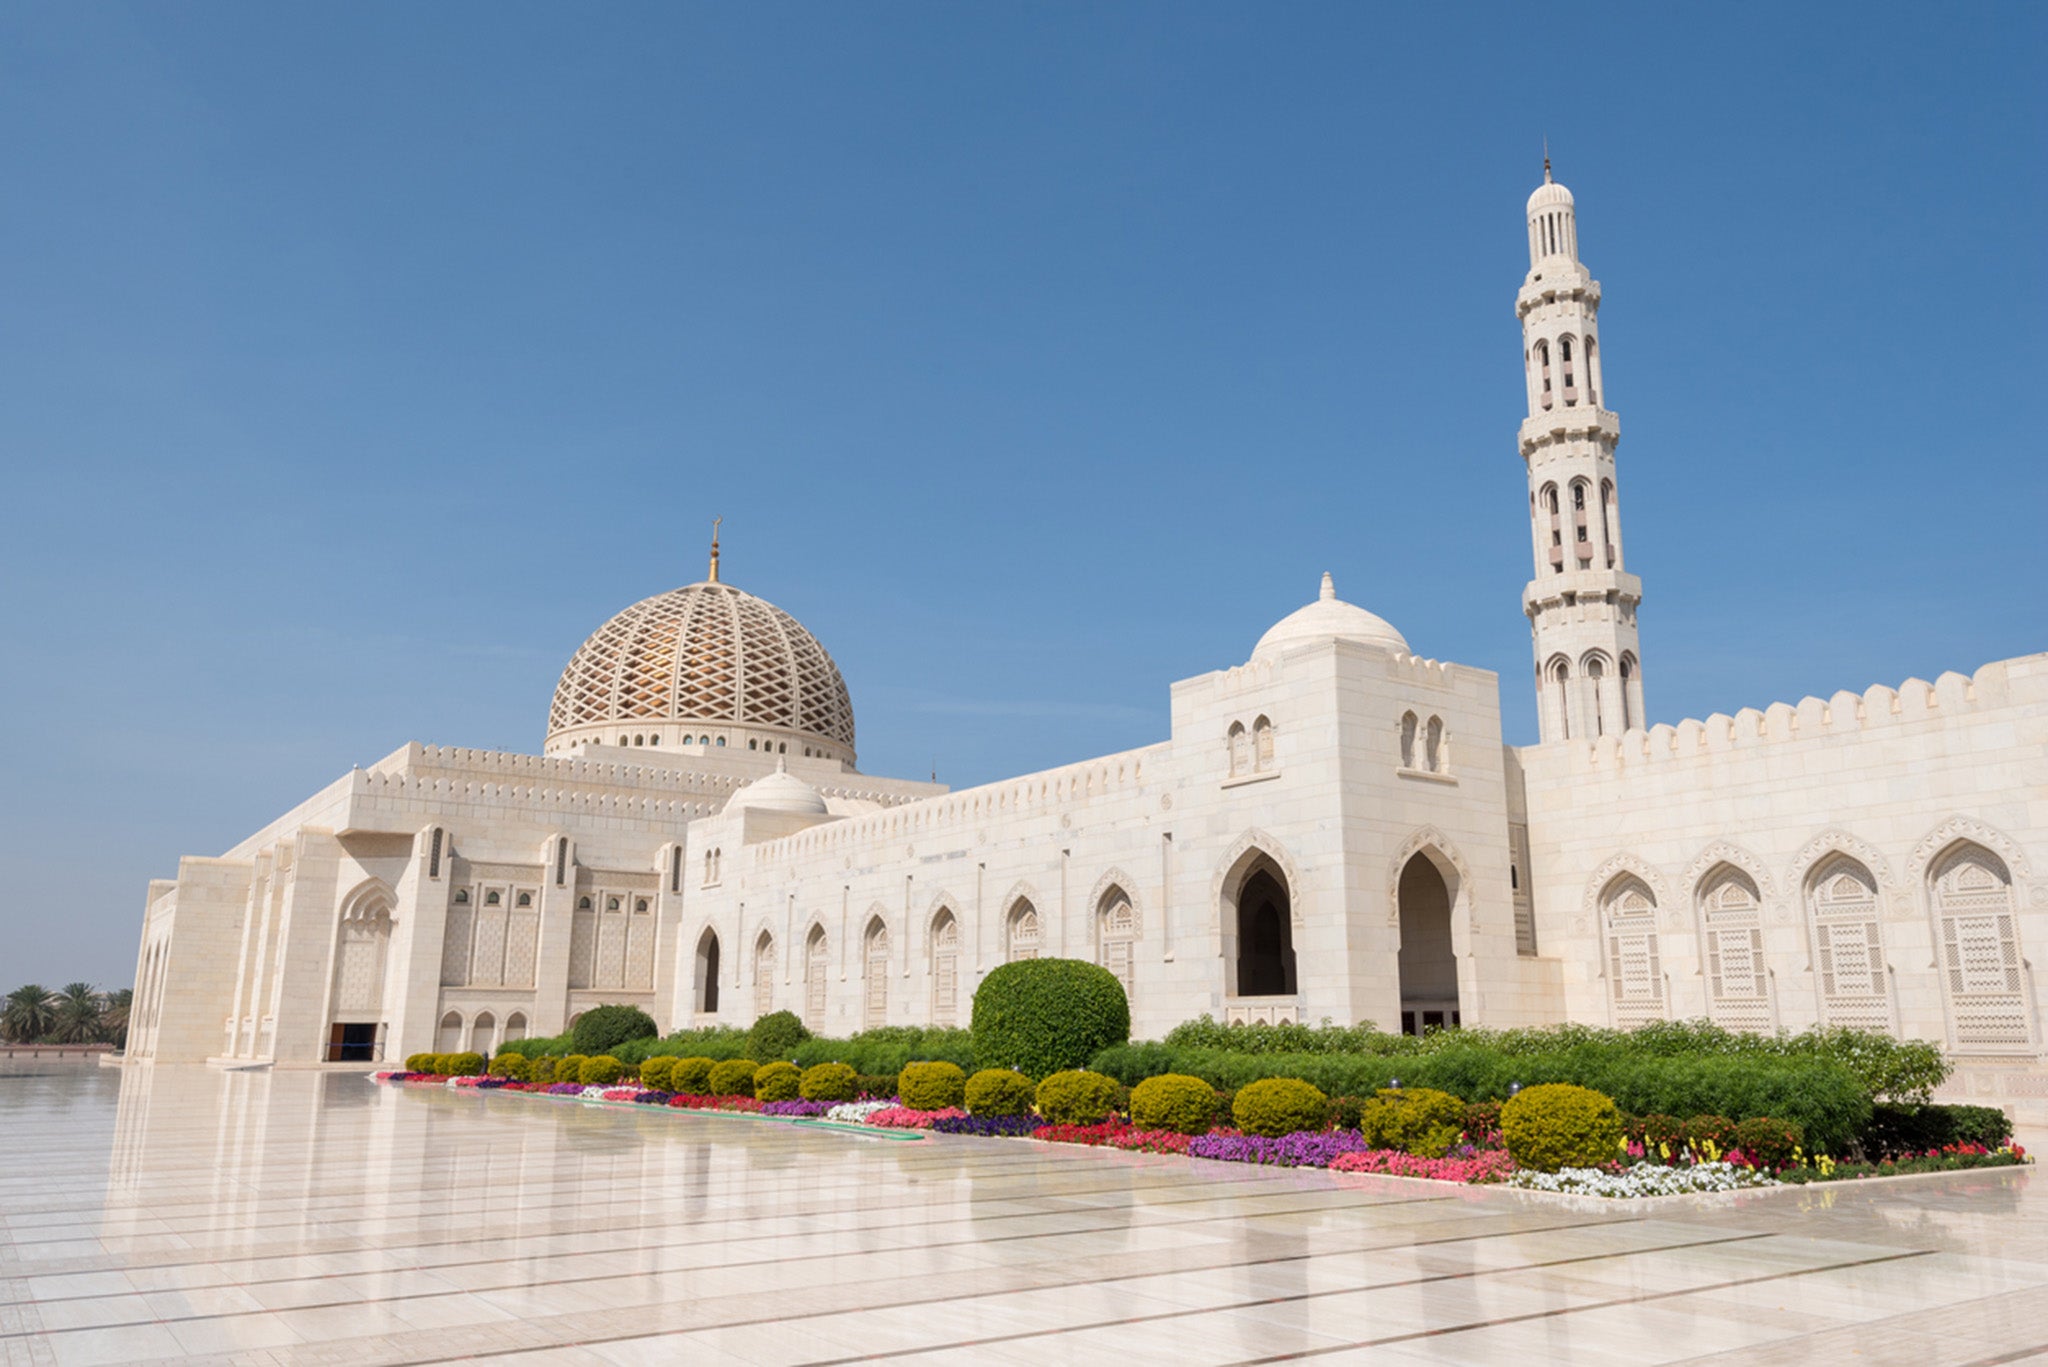 Head to Sultan Qaboos Grand Mosque for divine architecture